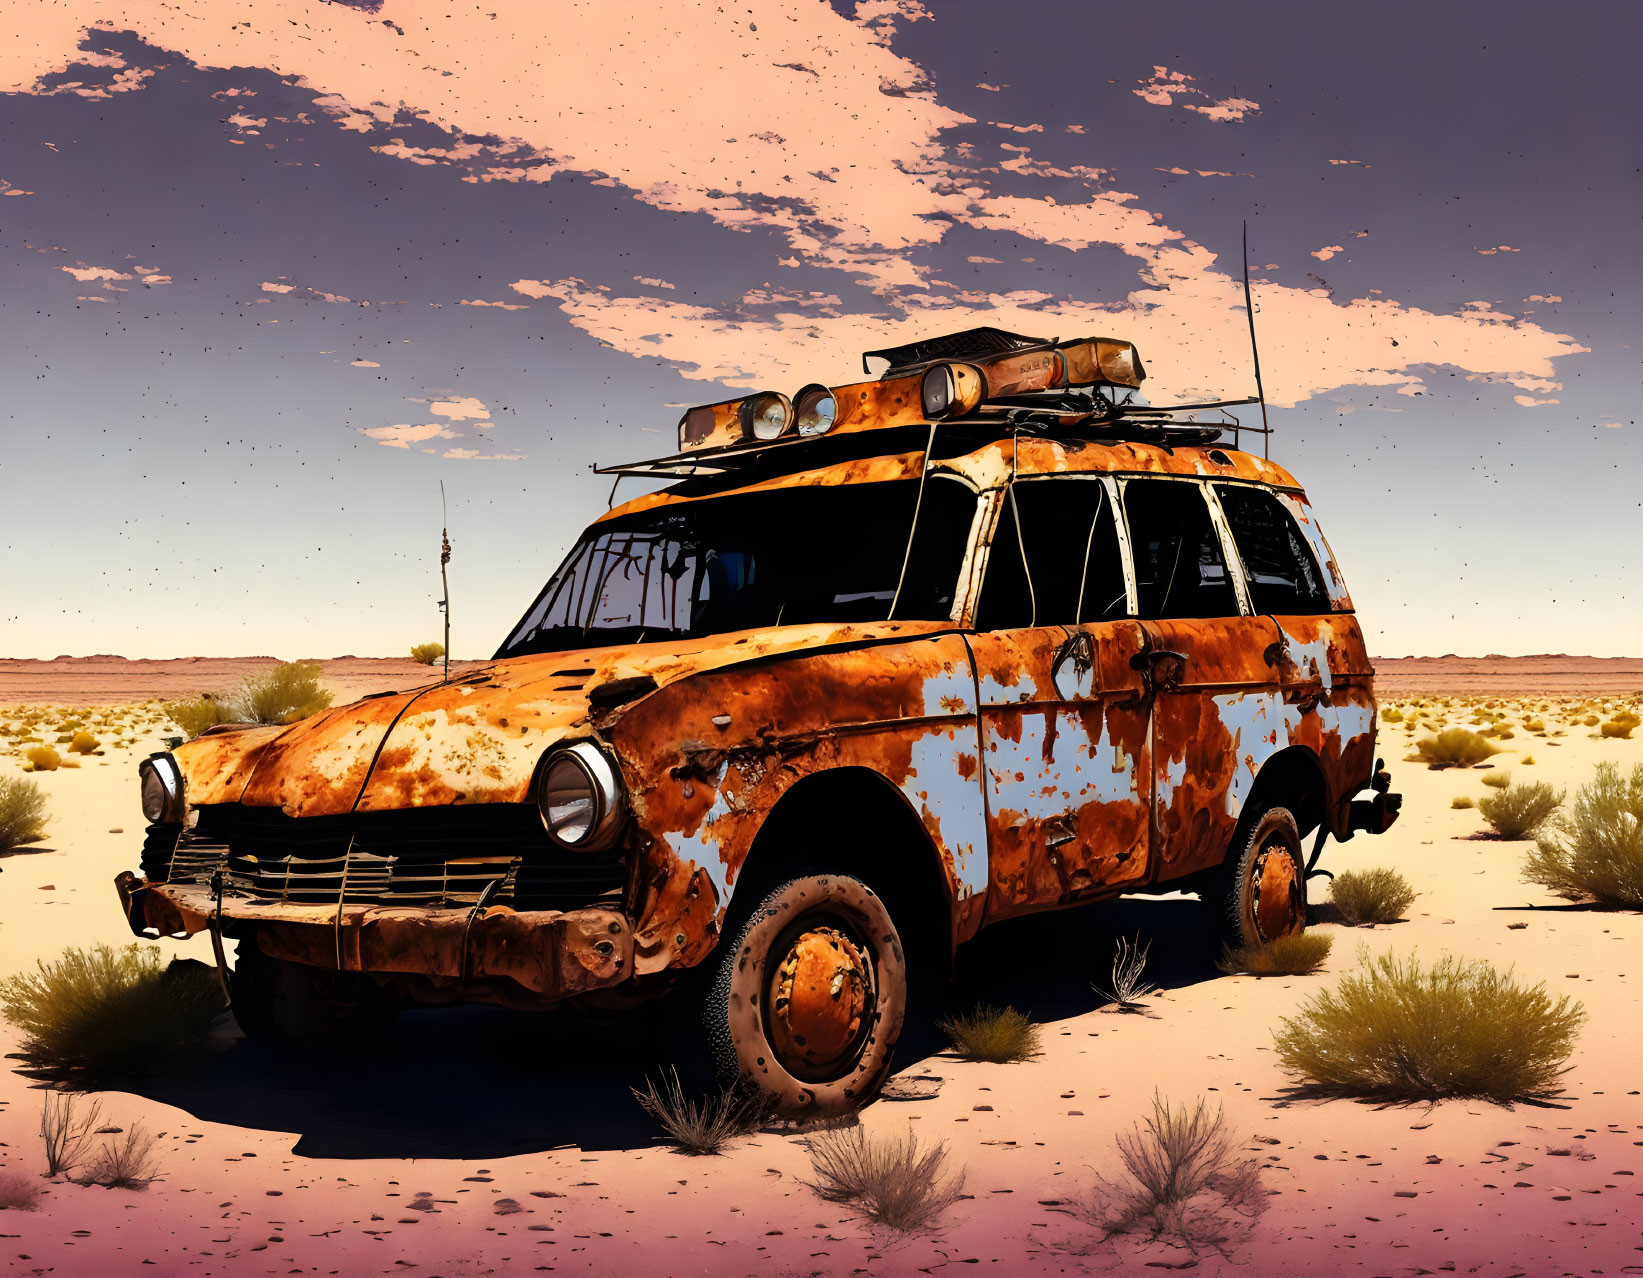 Abandoned rusty vehicle with roof rack in barren desert landscape